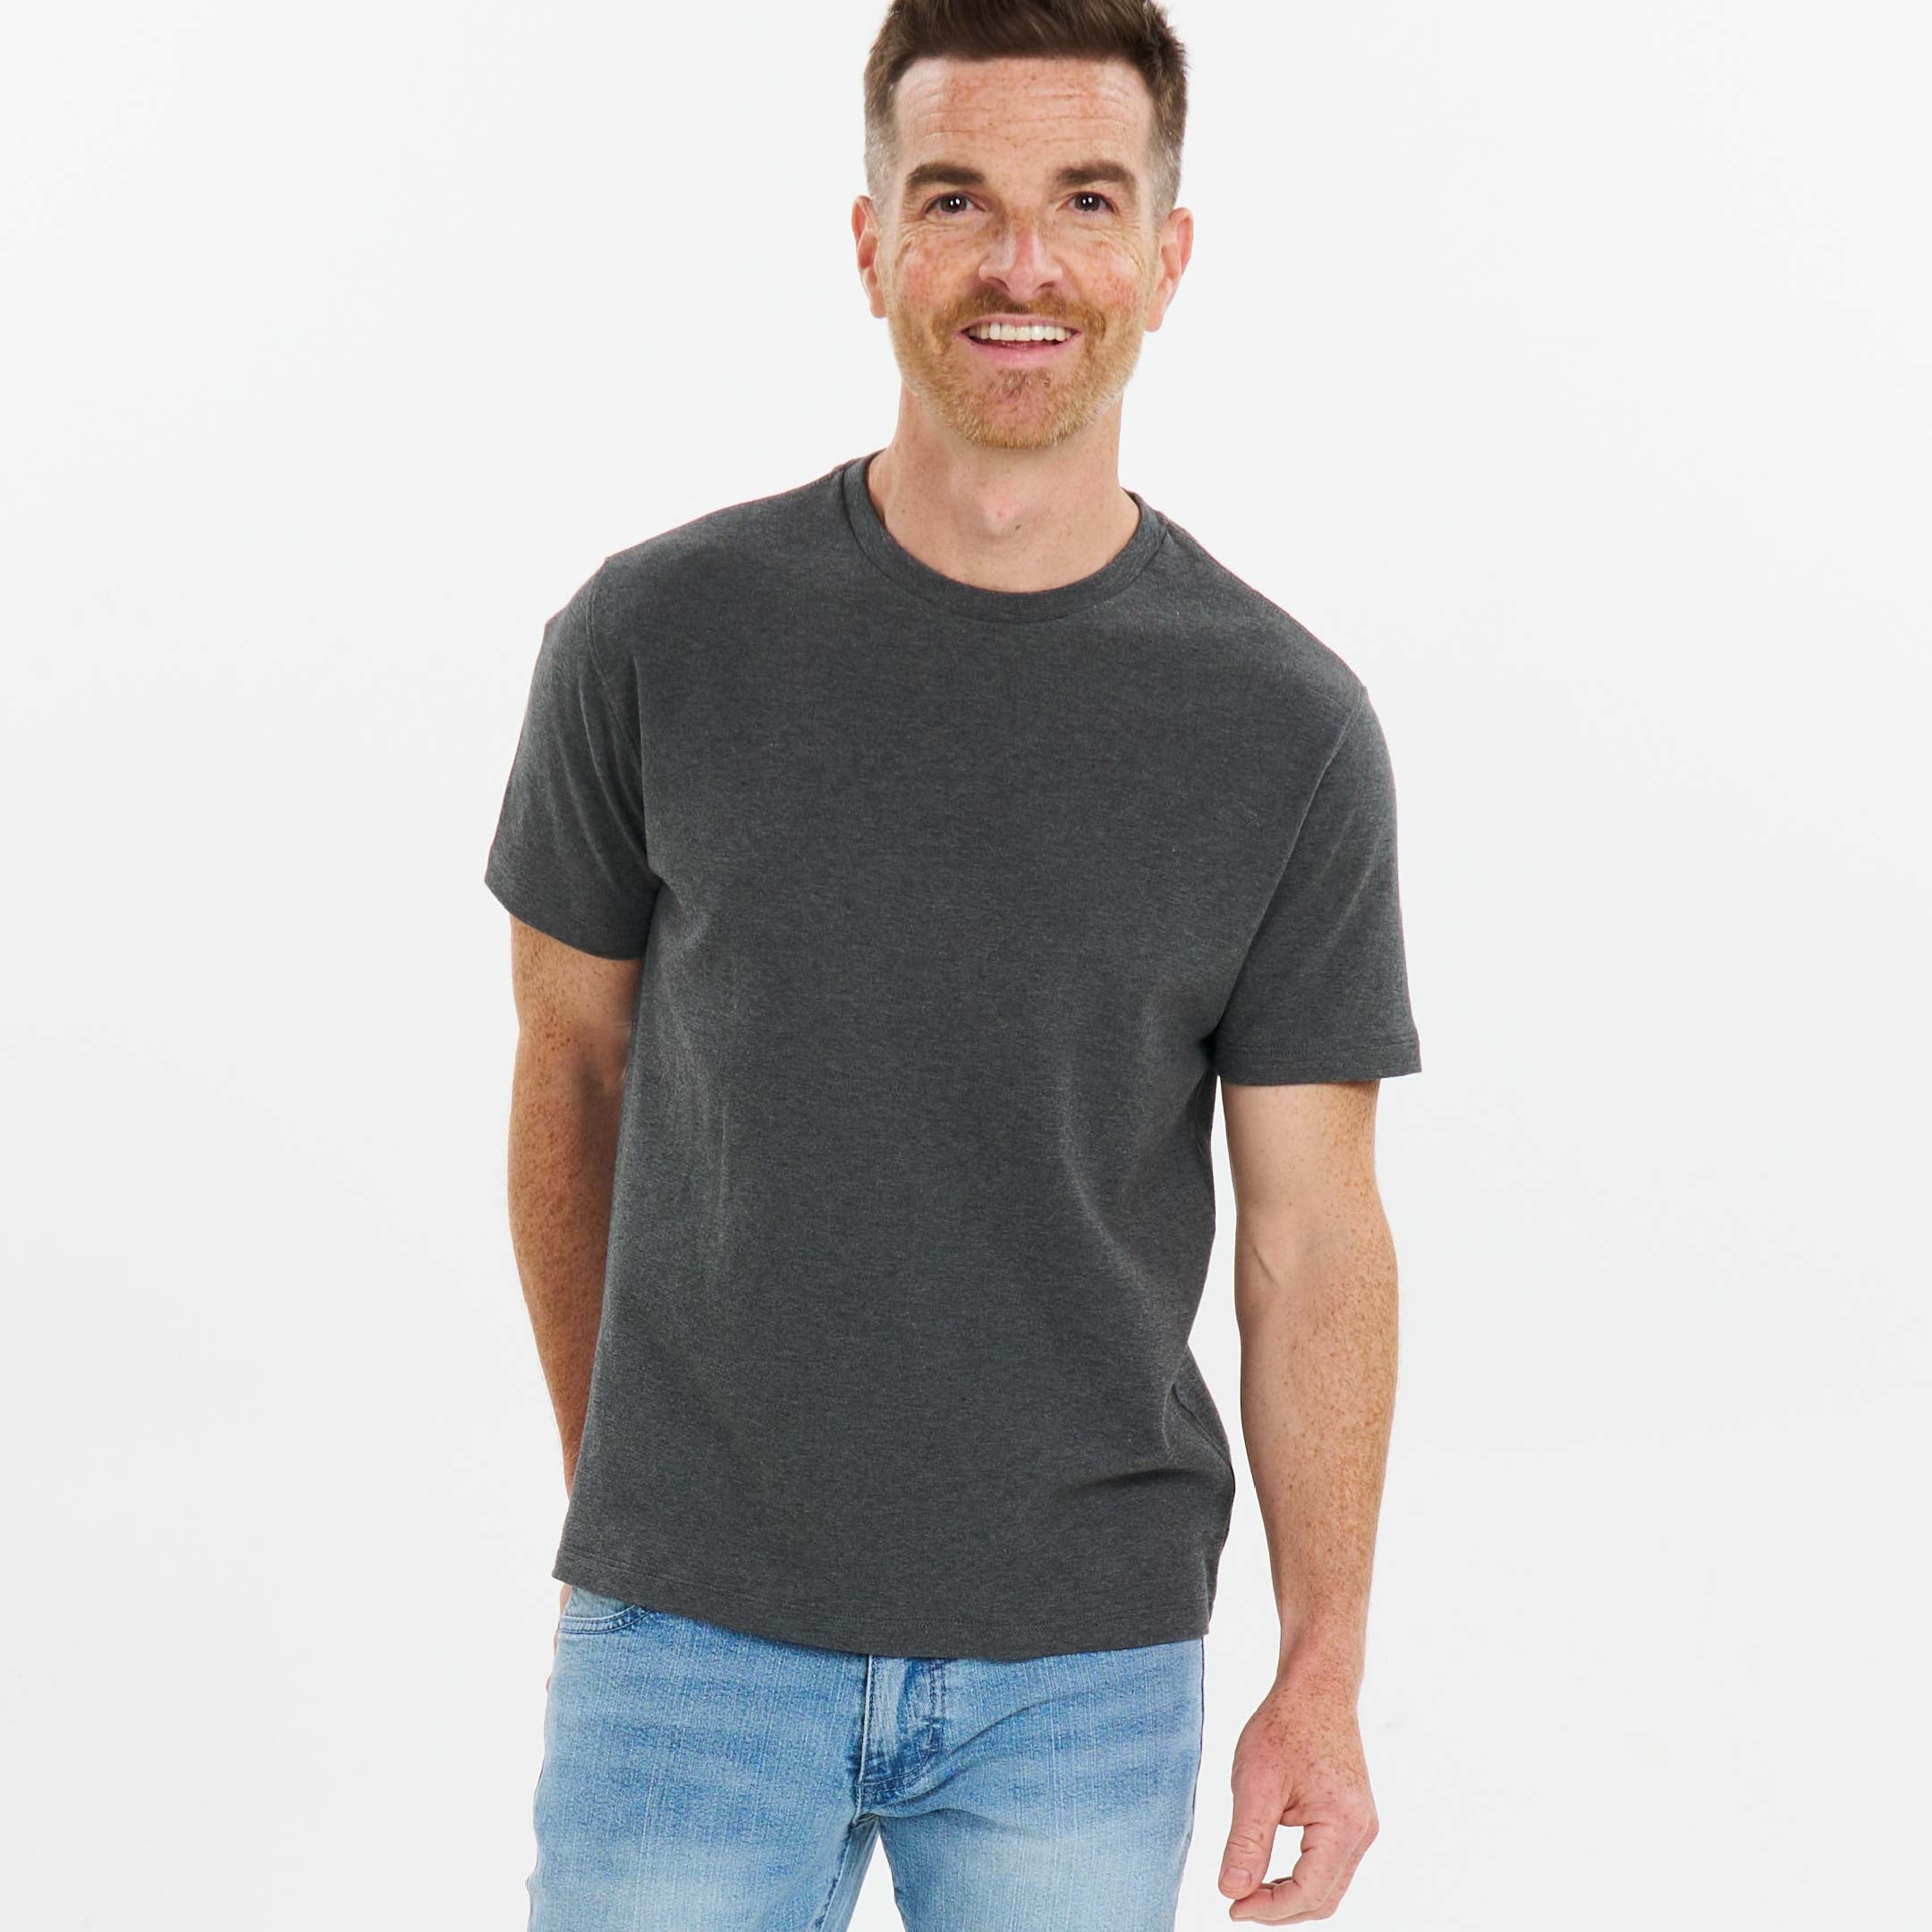 Ash & Erie Heather Charcoal Luxury Soft Touch Crew Neck T-Shirt for Short Men   Short Sleeve Premium Tee